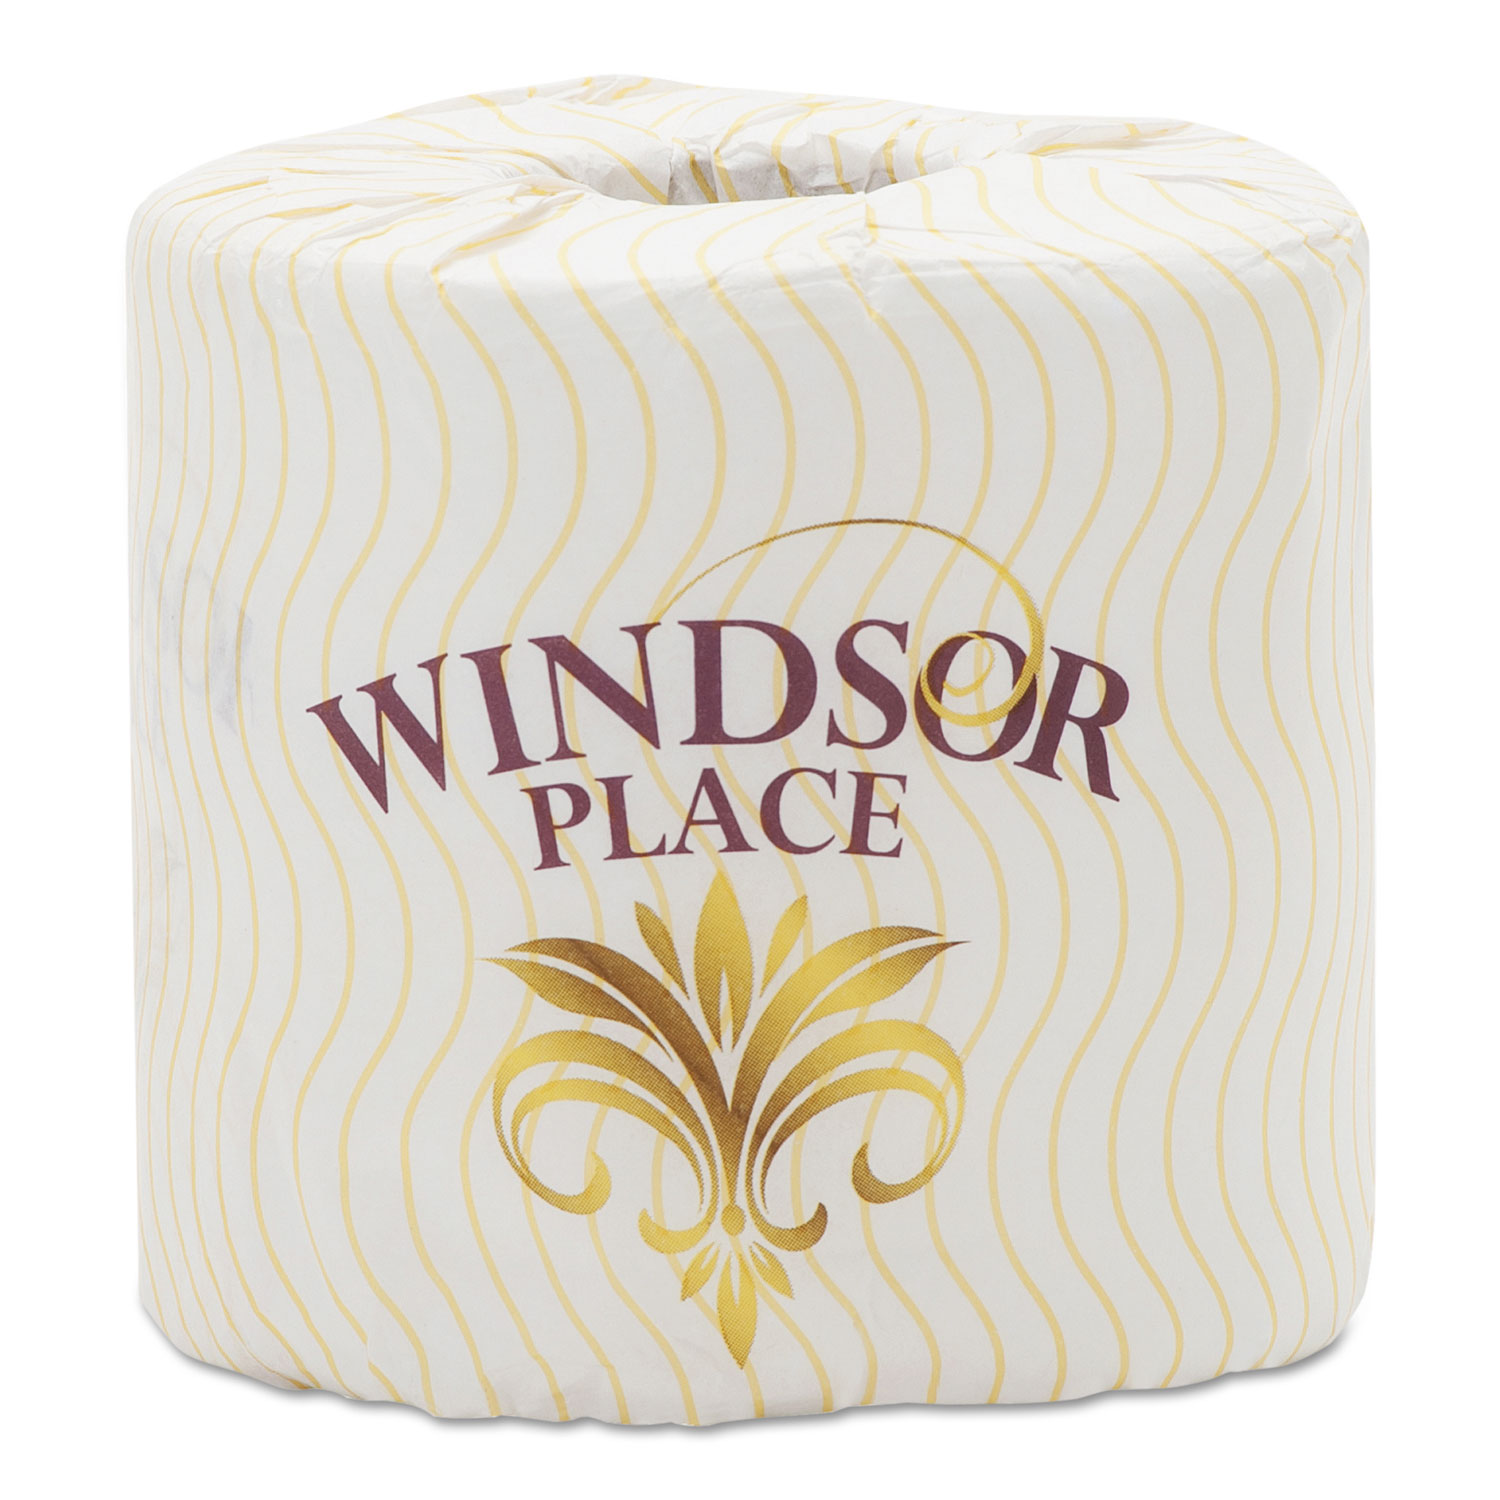 Windsor Place Premium Bathroom Tissue, 2-Ply, 4.5 x 3.5, 500/Rl, 80 Rolls/CT